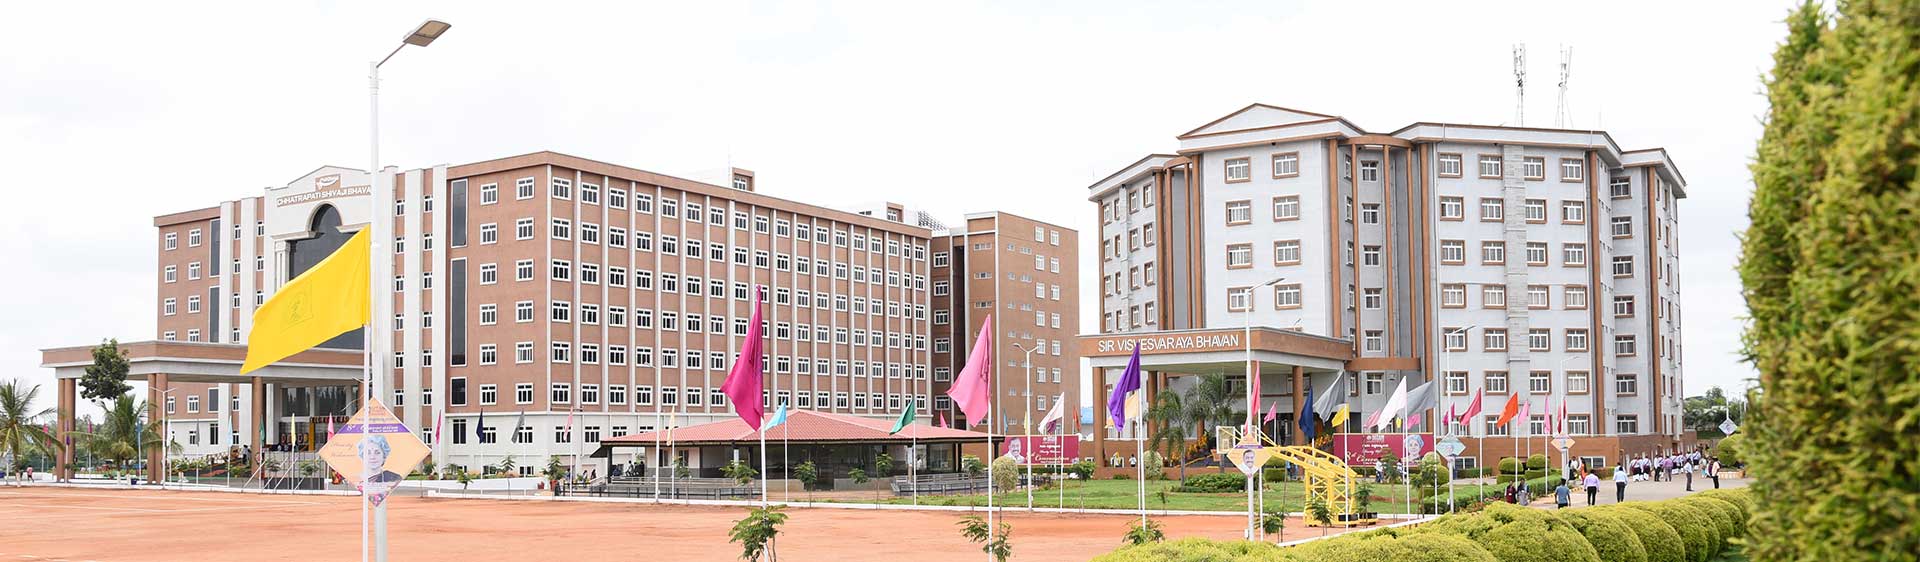 GITAM (Gandhi Institute of Technology and Management) University, Bengaluru Campus Image